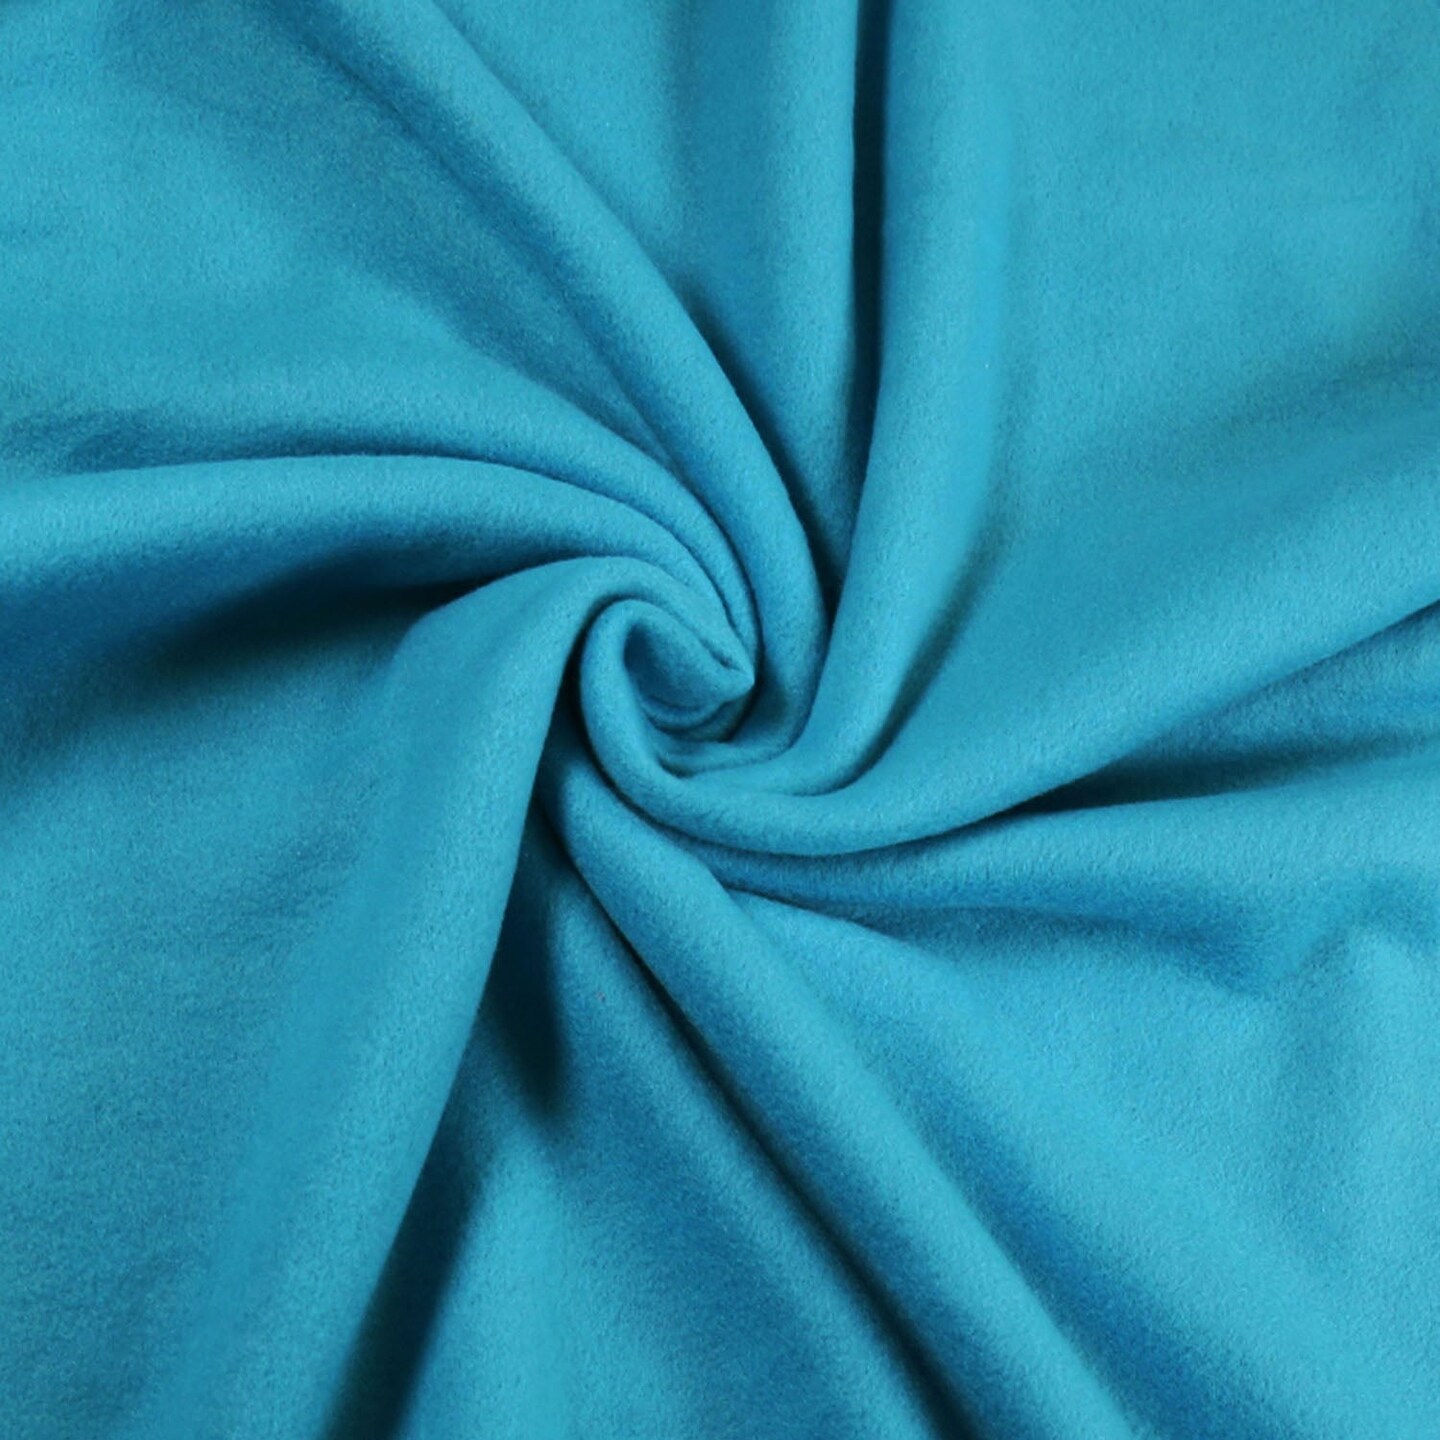 Green Anti Pill Plush Fleece Fabric